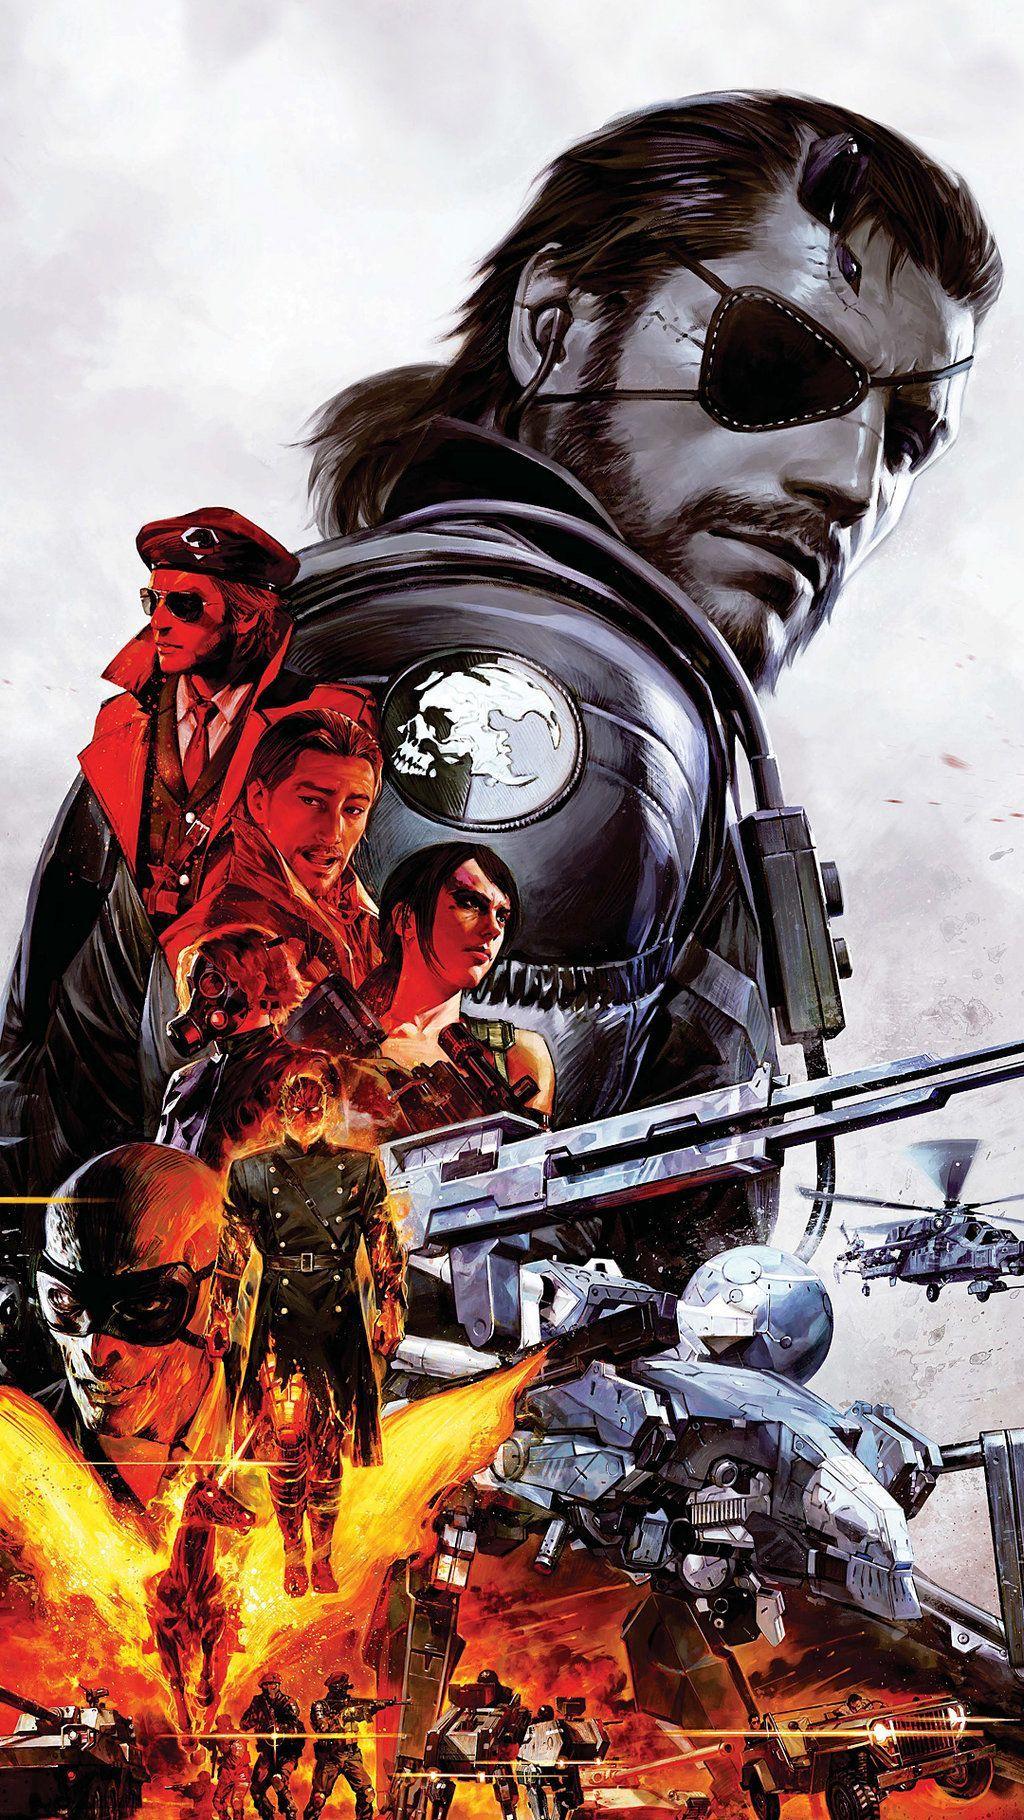 Metal Gear iPhone Wallpaper Free Metal Gear iPhone